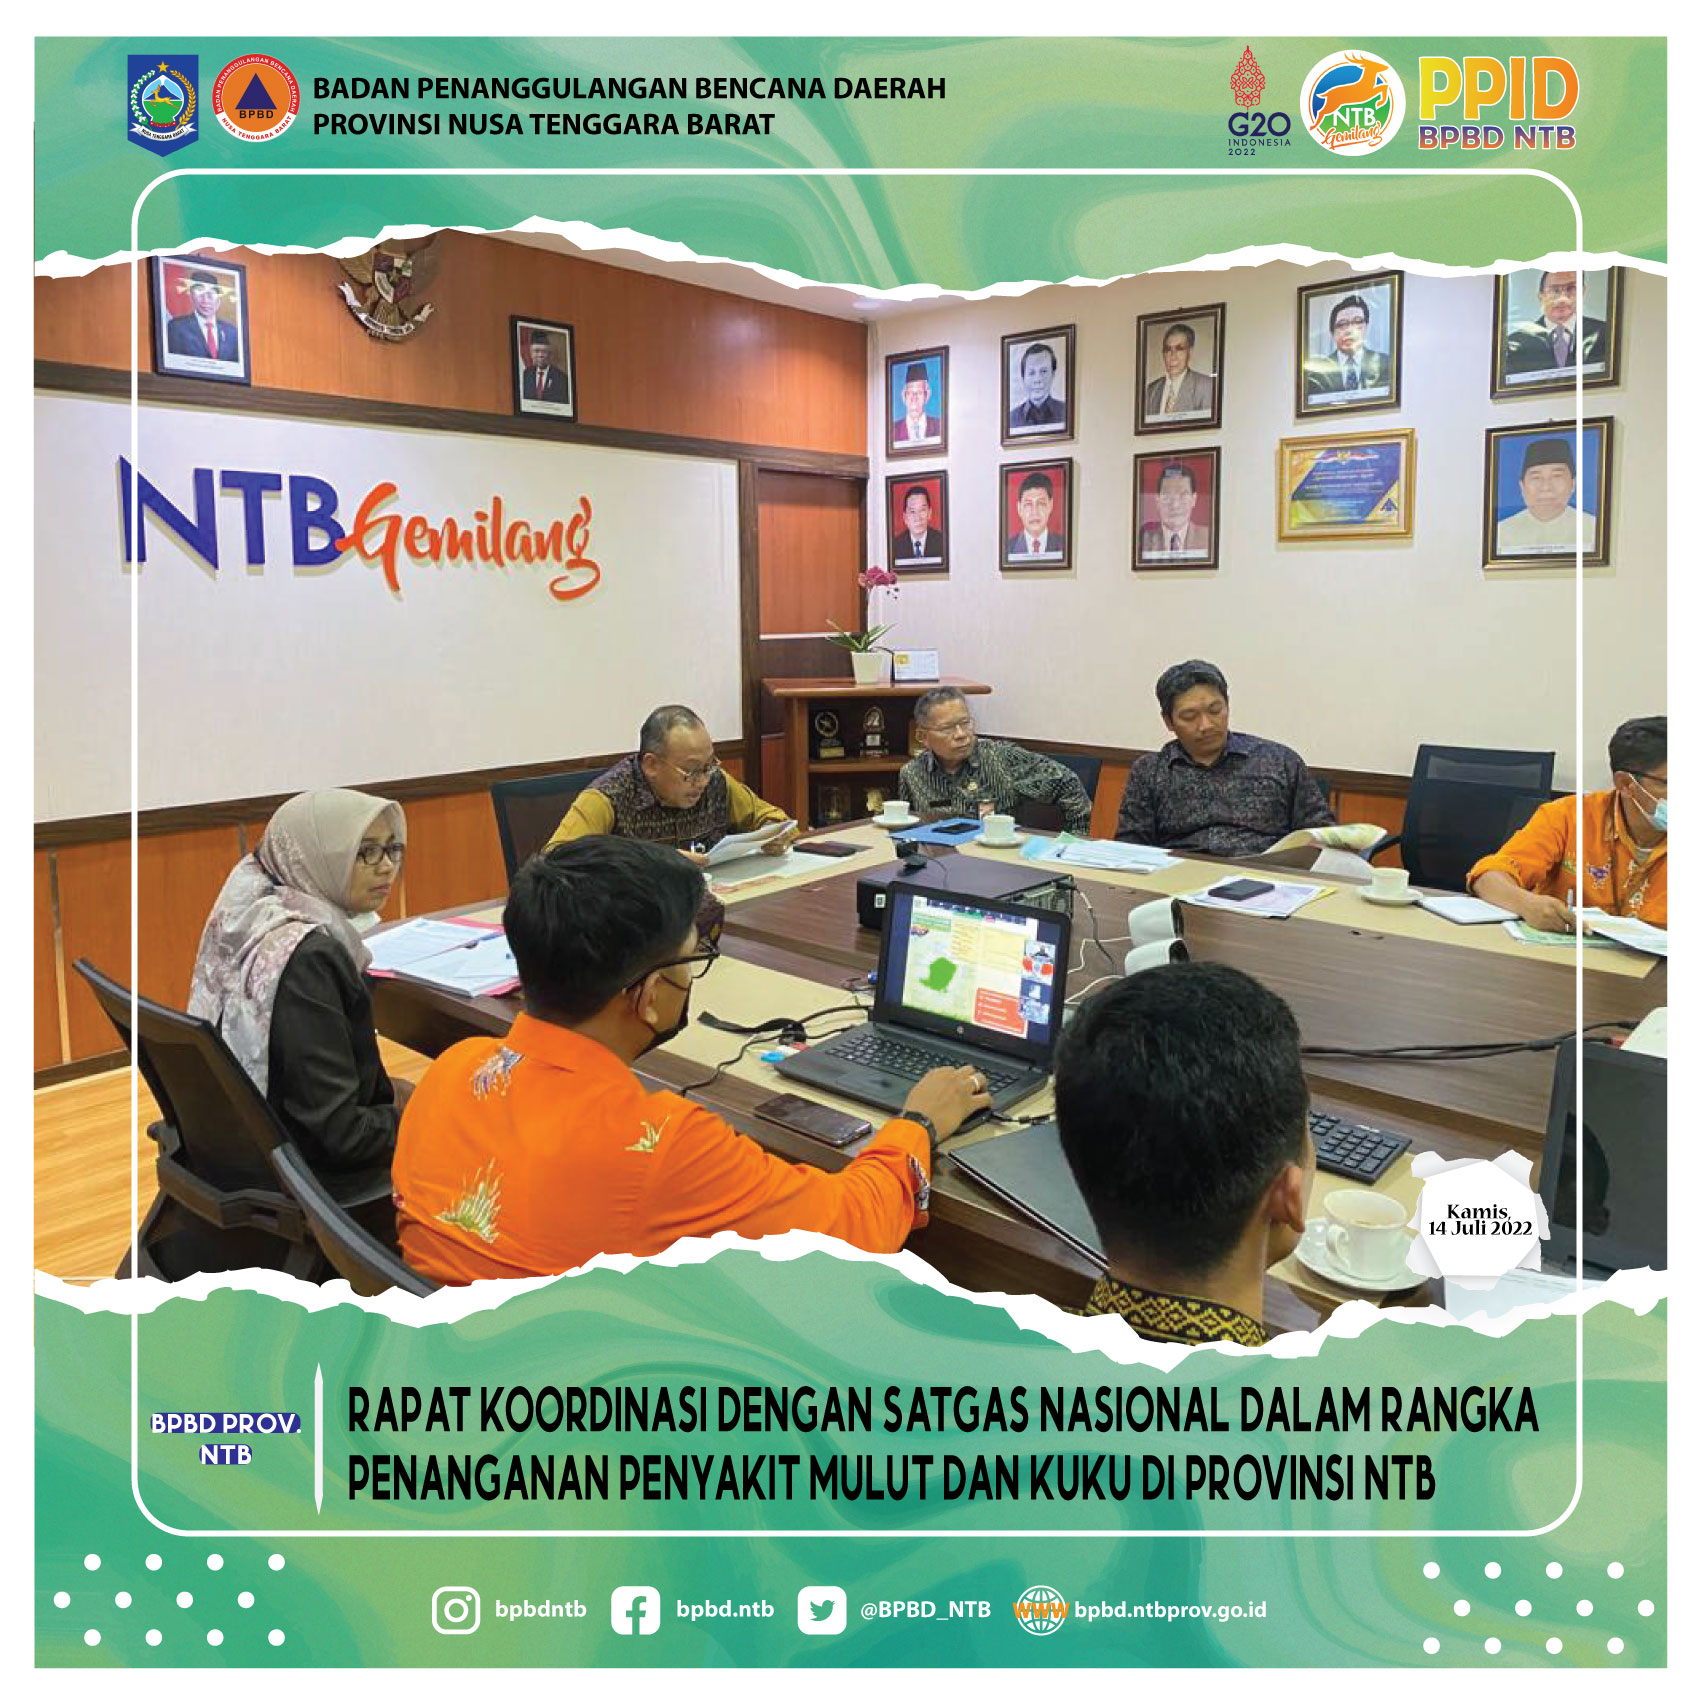 Rapat Koordinasi dengan Satgas Nasional dalam rangka Penanganan Penyakit Mulut dan Kuku di Provinsi NTB ( Kamis, 14 Juli 2022)